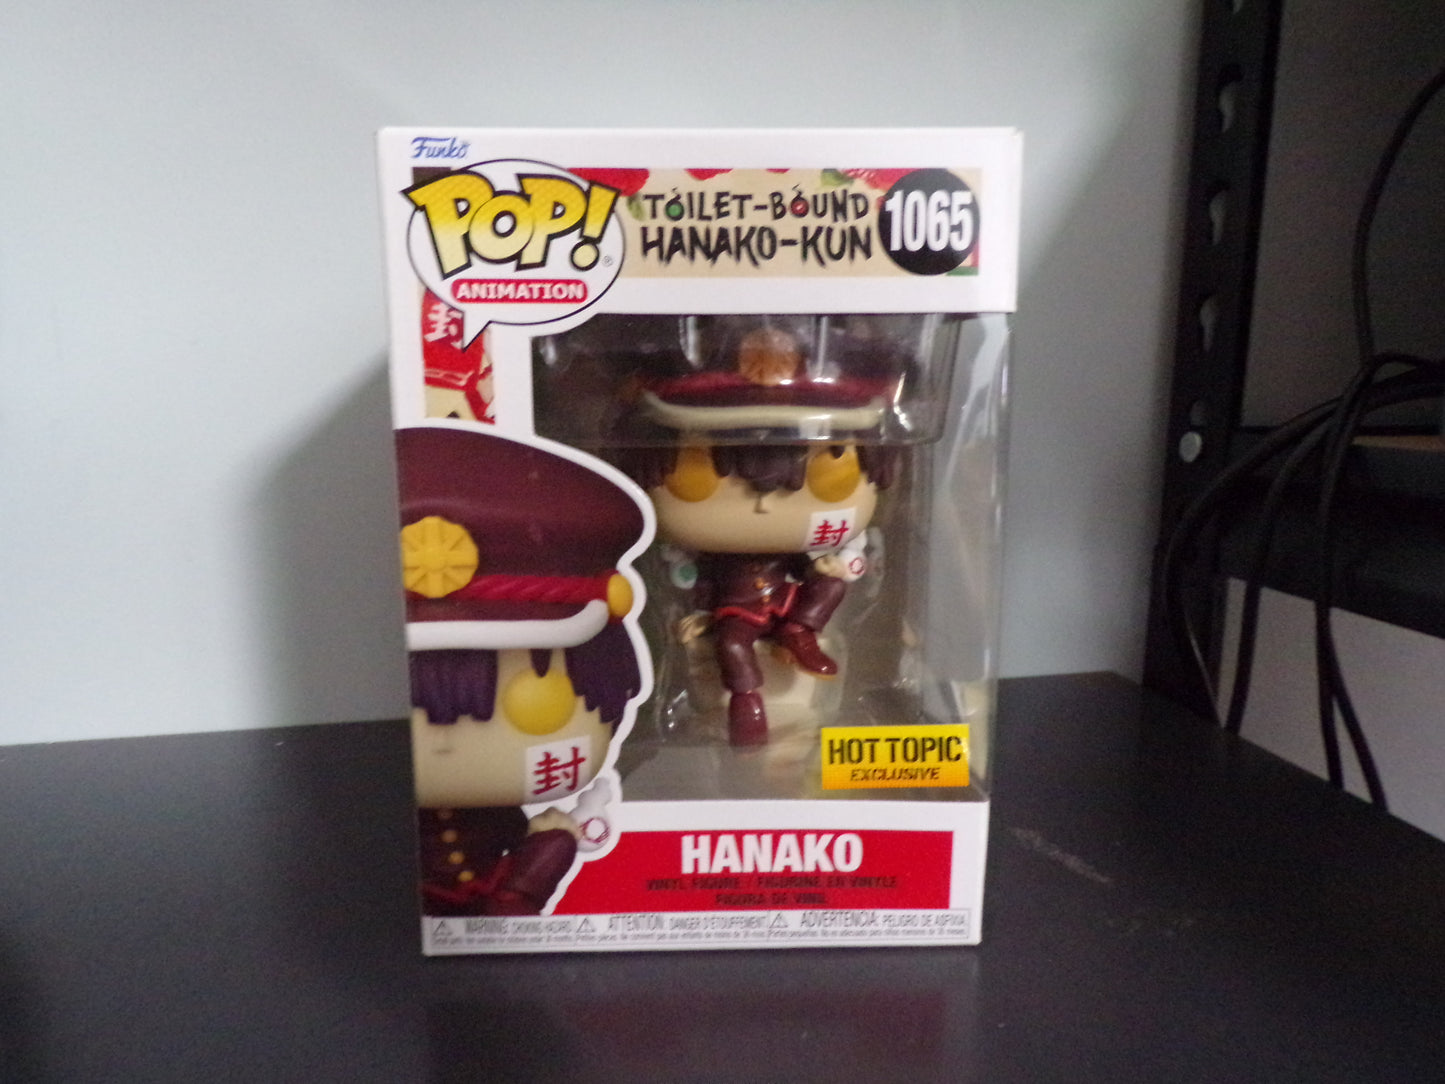 Funko Pop! Toilet-Bound Hanako-Kun - Hanako Hot Topic Exclusive #1065